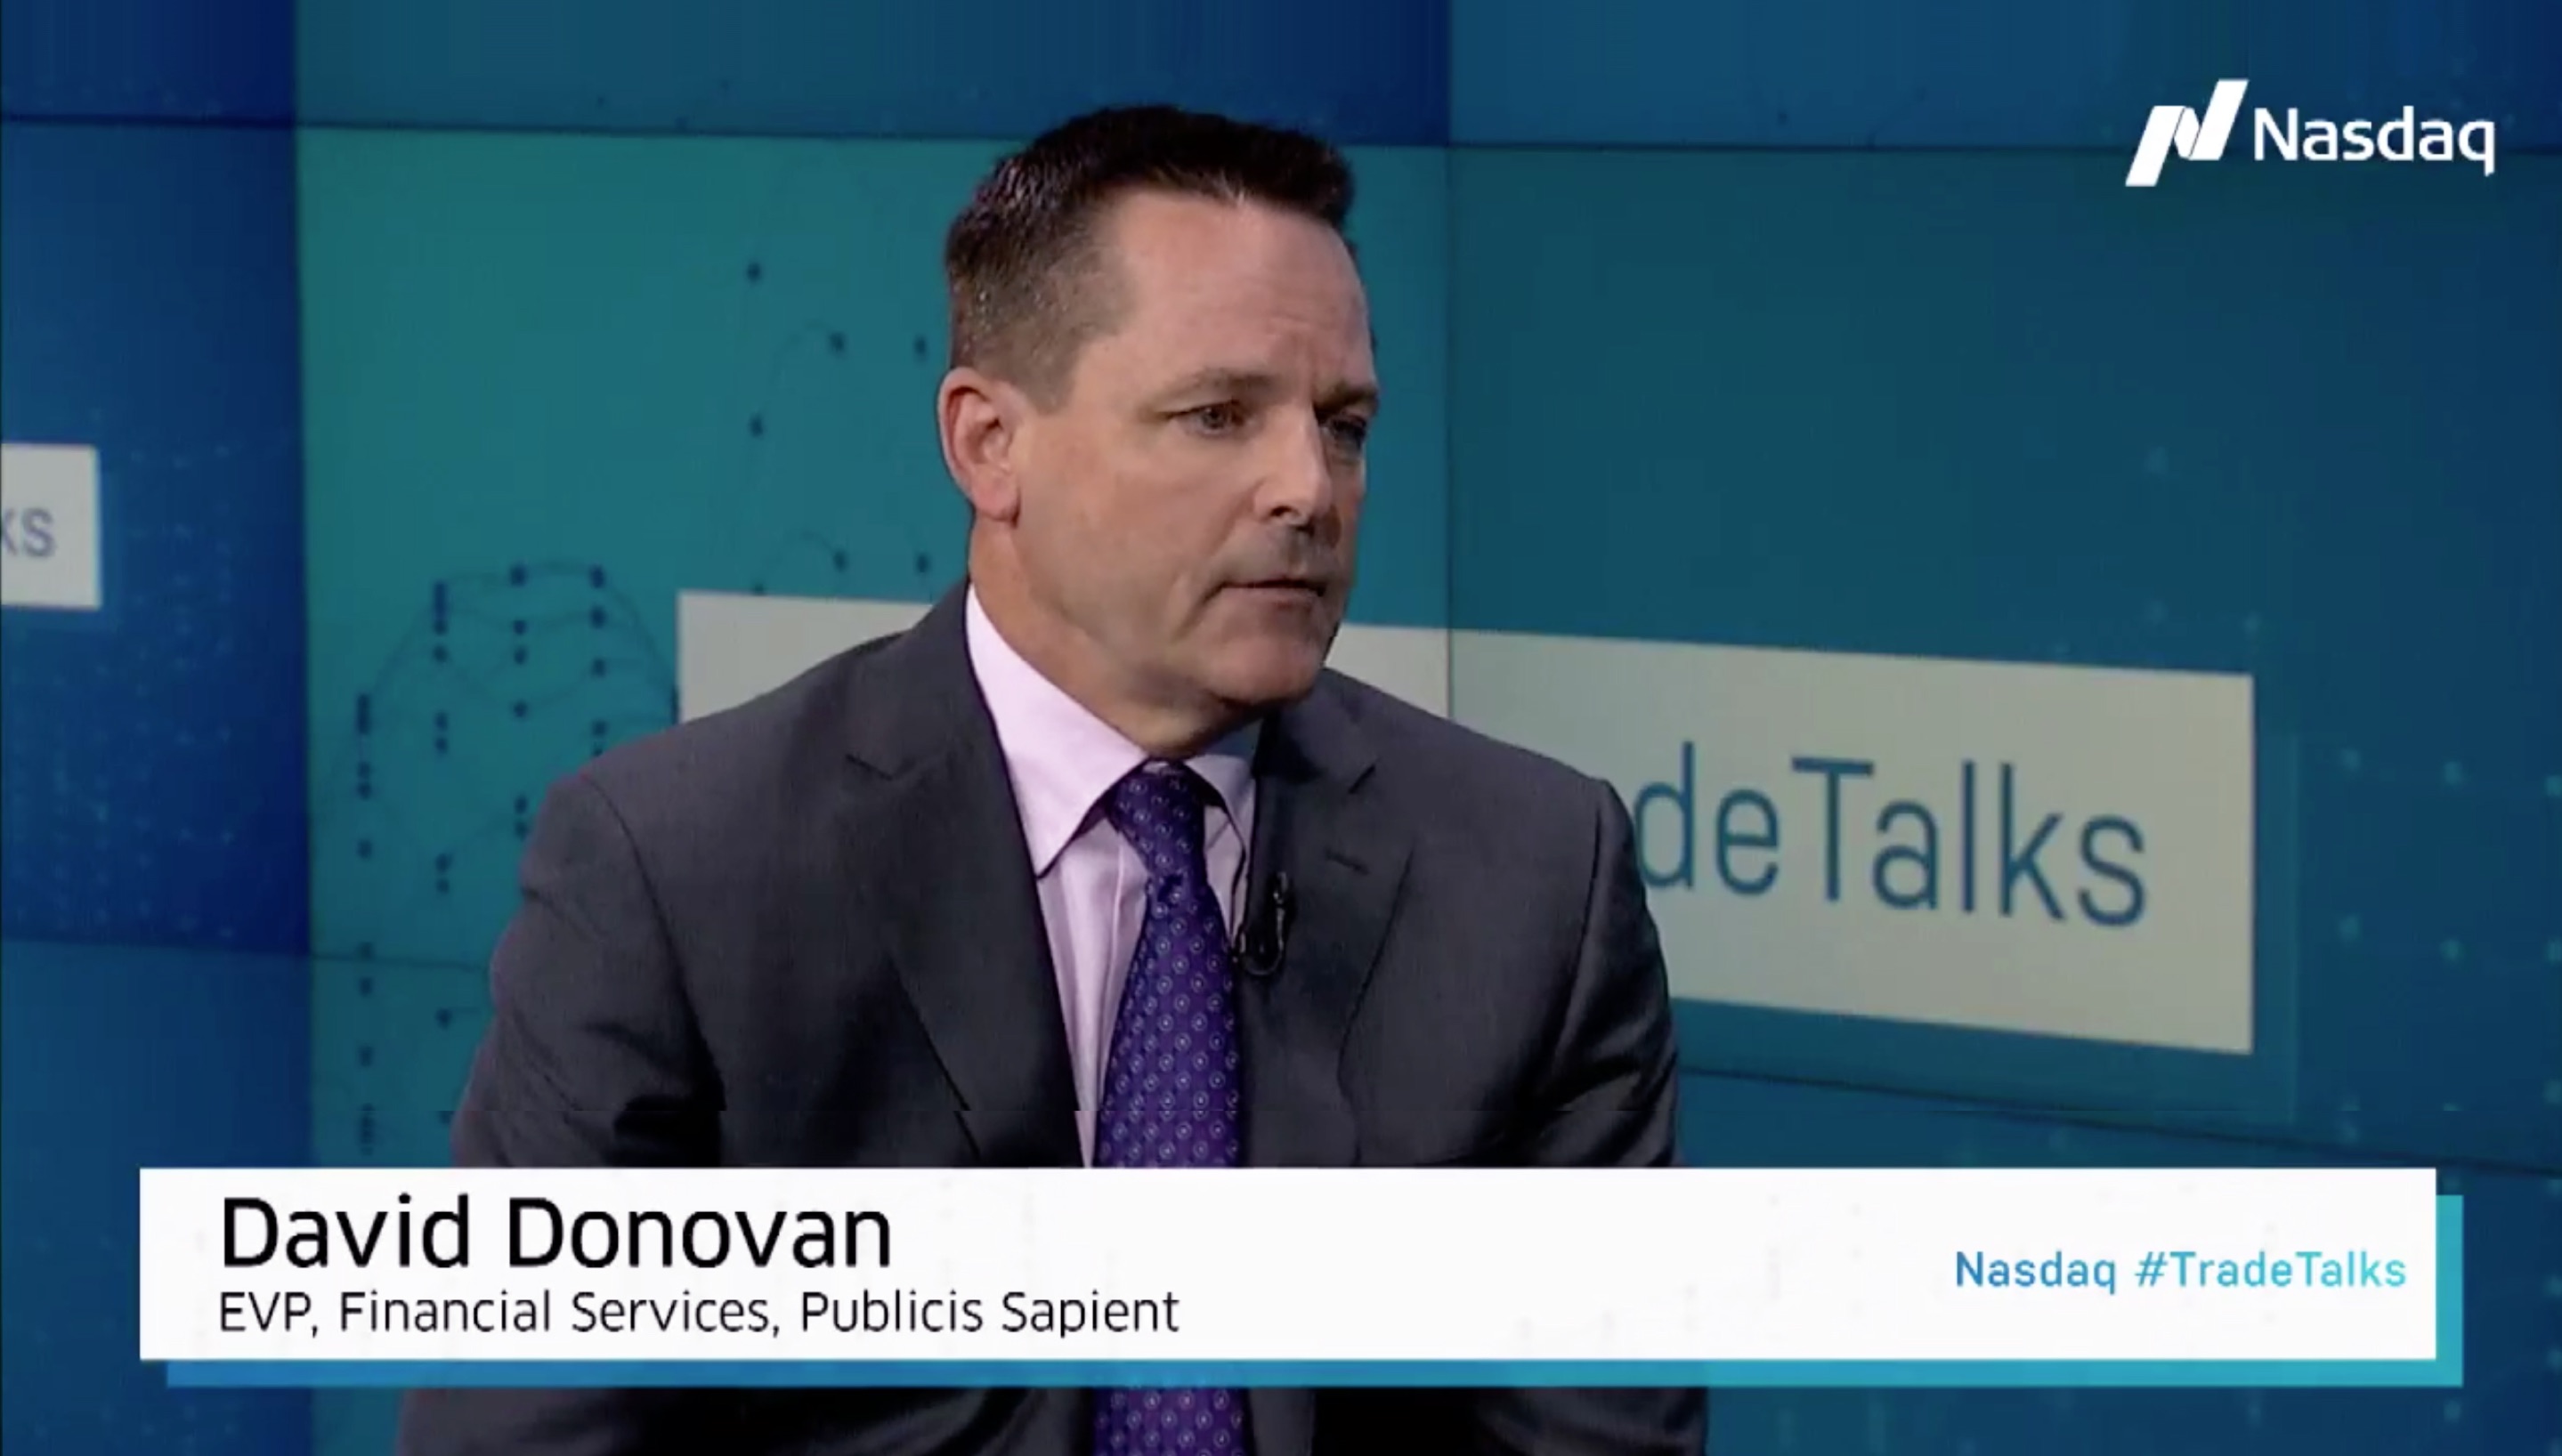 Publicis Sapient's David Donovan discusses the biggest challenges faced by banks.